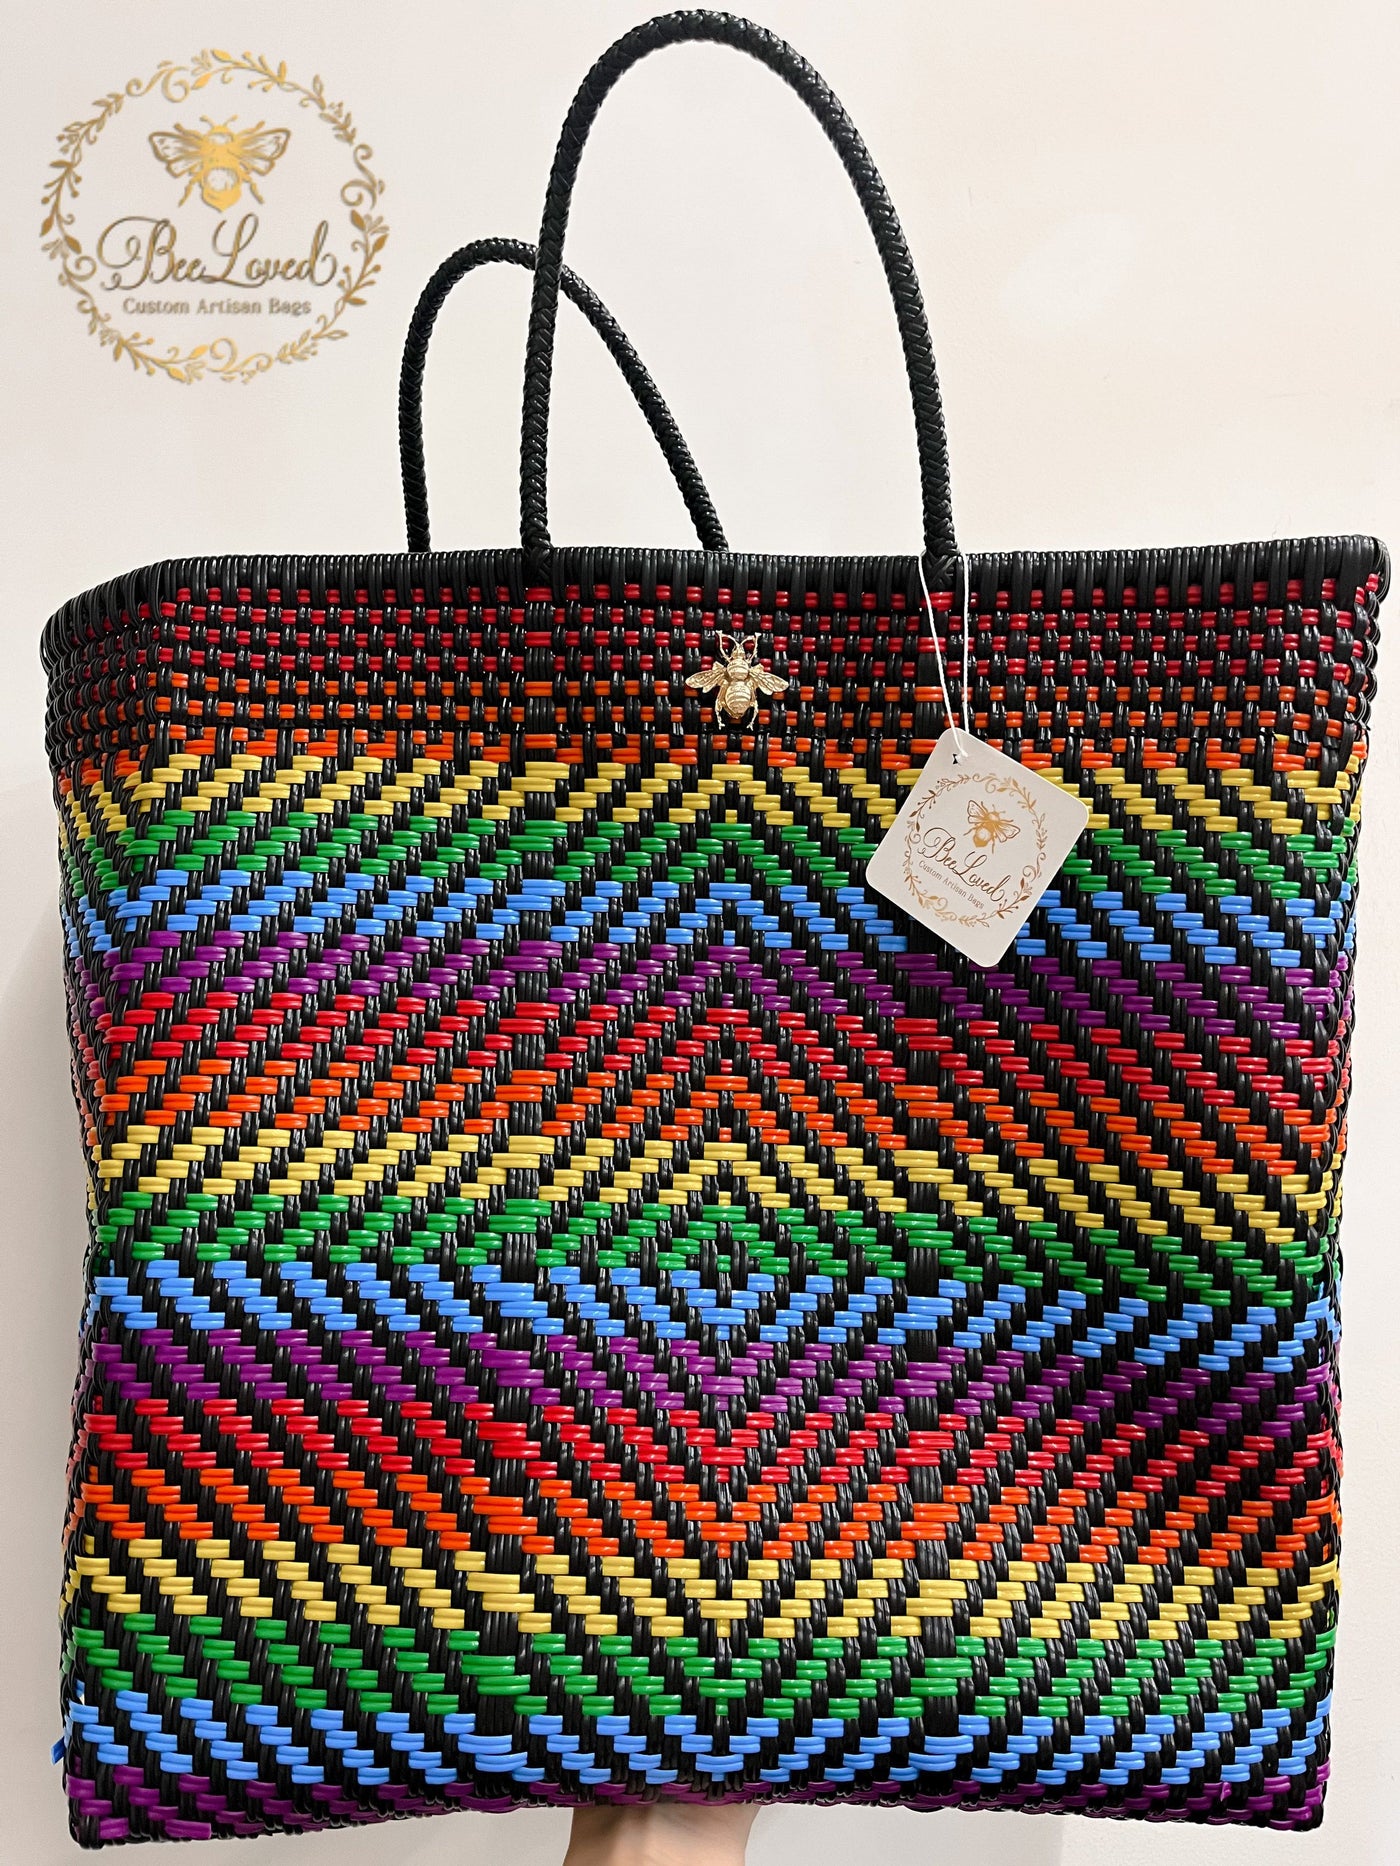 BeeLoved Custom Artisan Bags and Gifts Handbags XL Rainbow Beech Bag